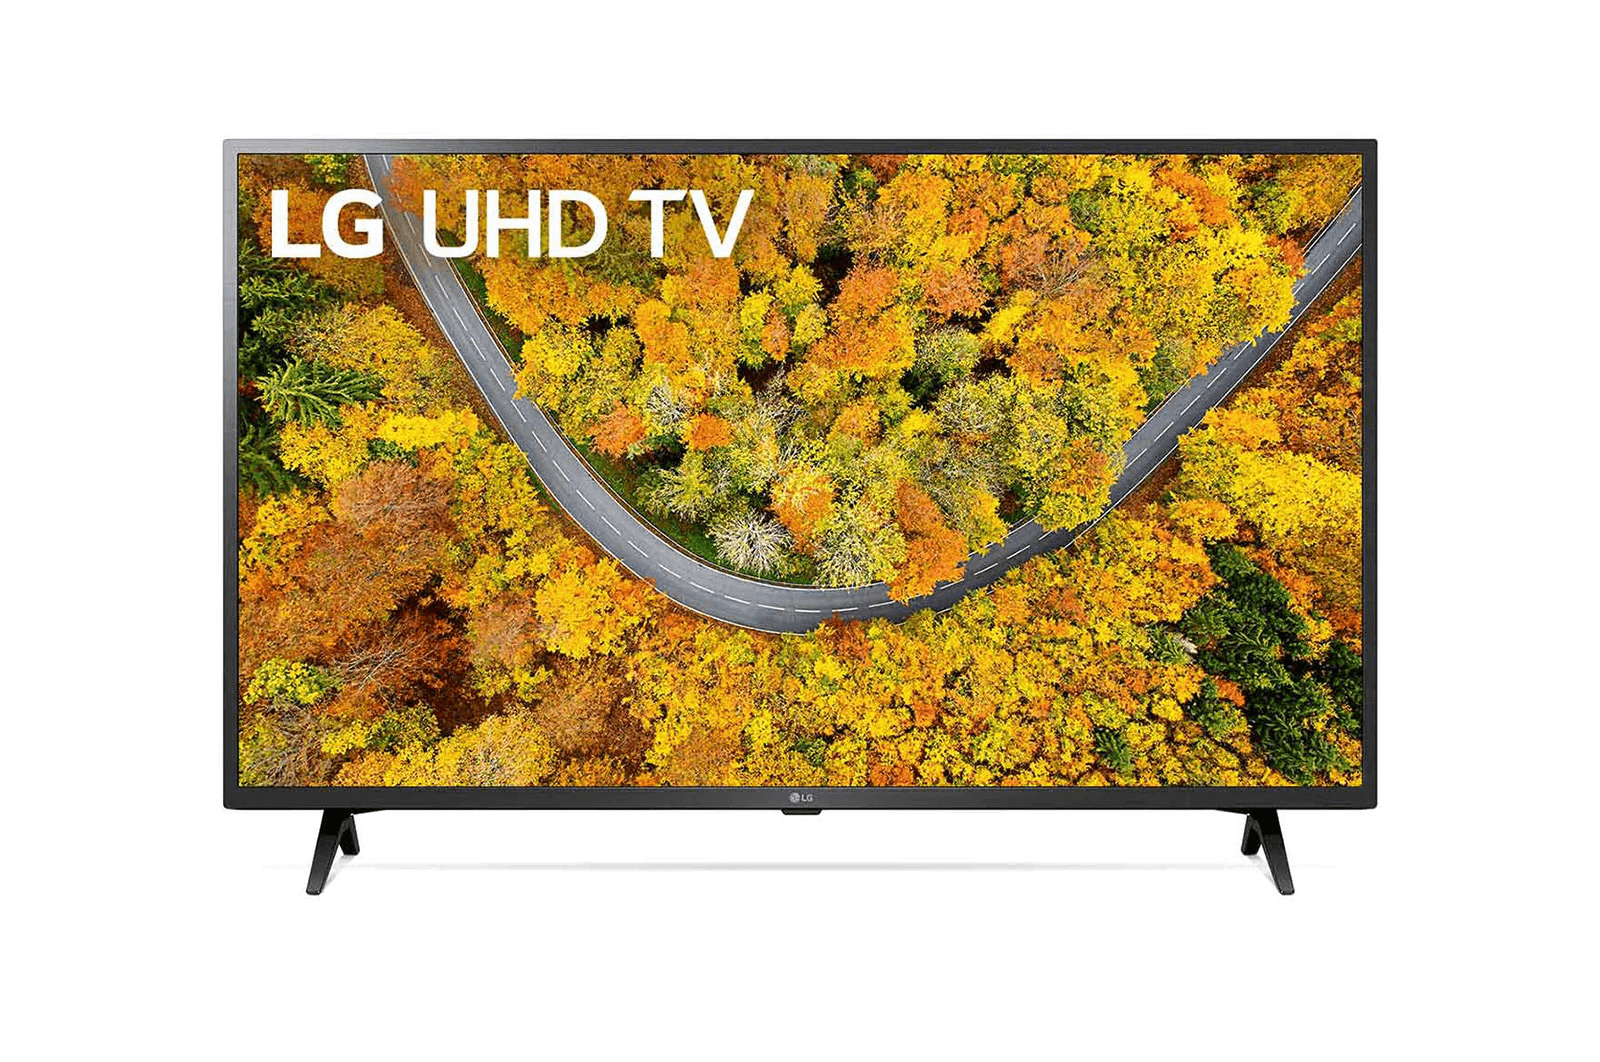 LG - LED TV 55UP7500PTC